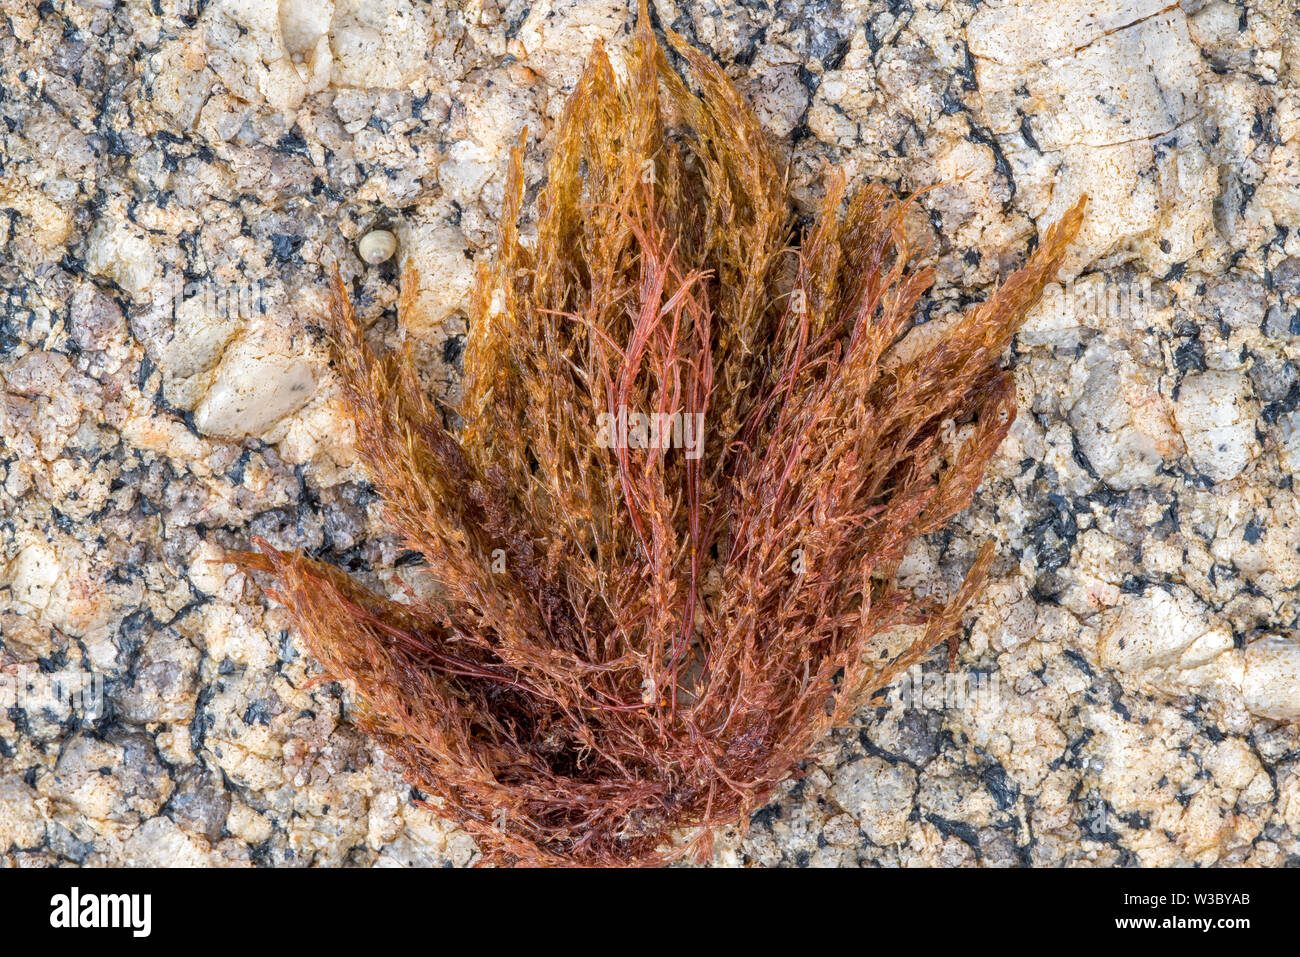 Bornetia secundiflora, red alga washed ashore on rocky beach Stock Photo